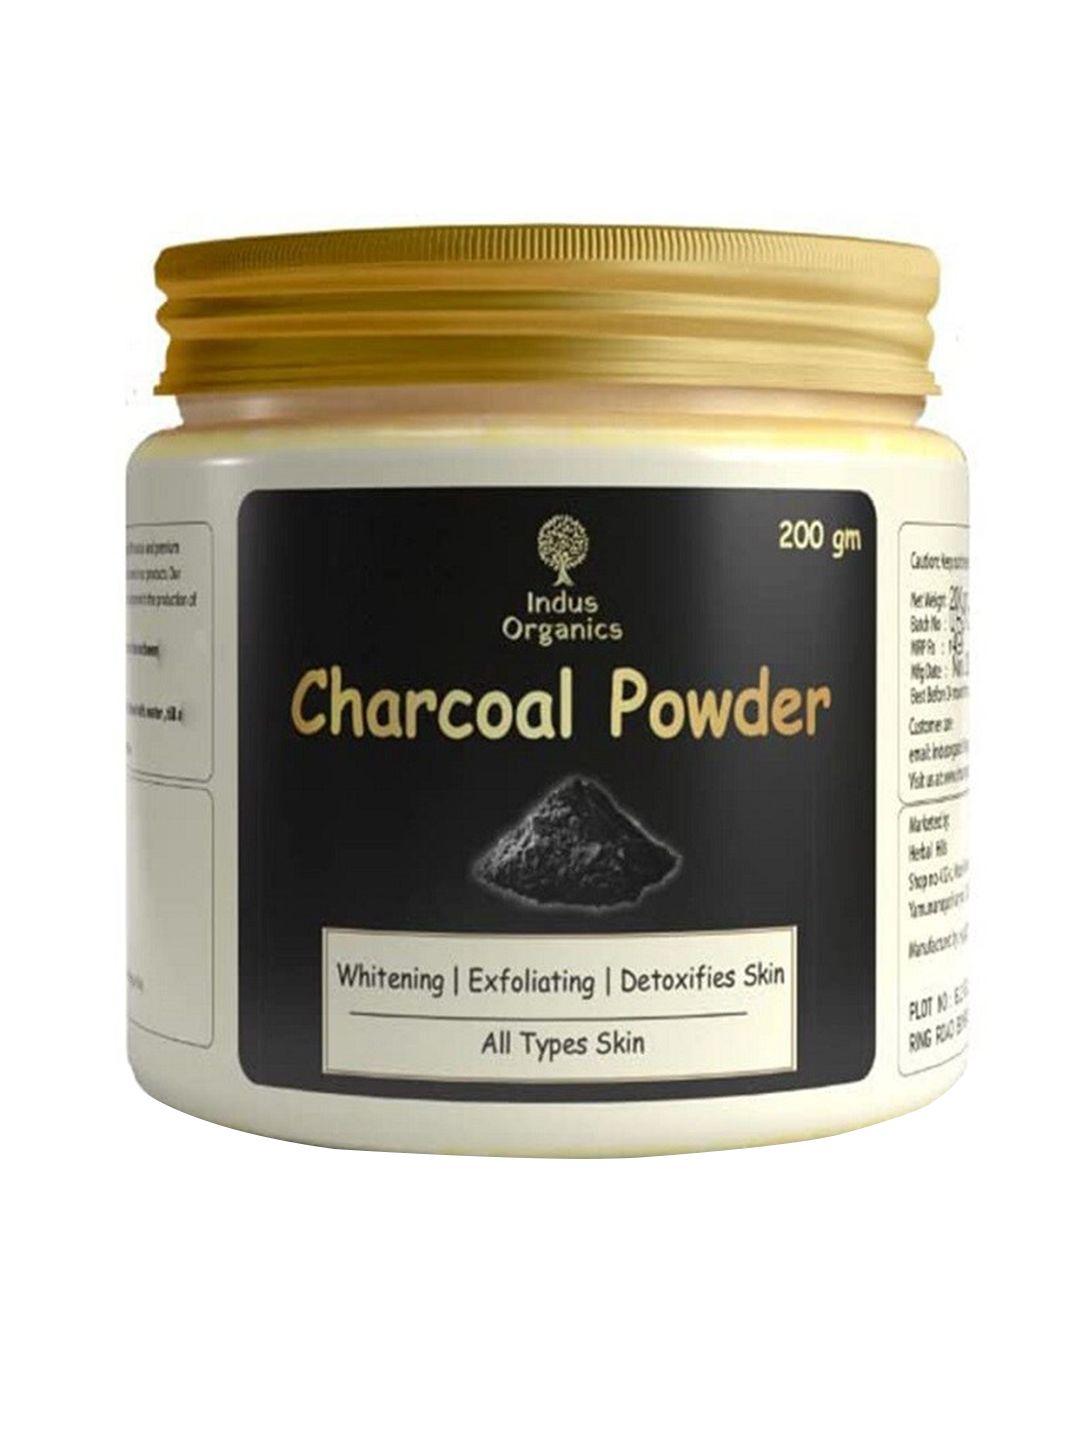 indus organics whitening & exfoliating charcoal powder-200g